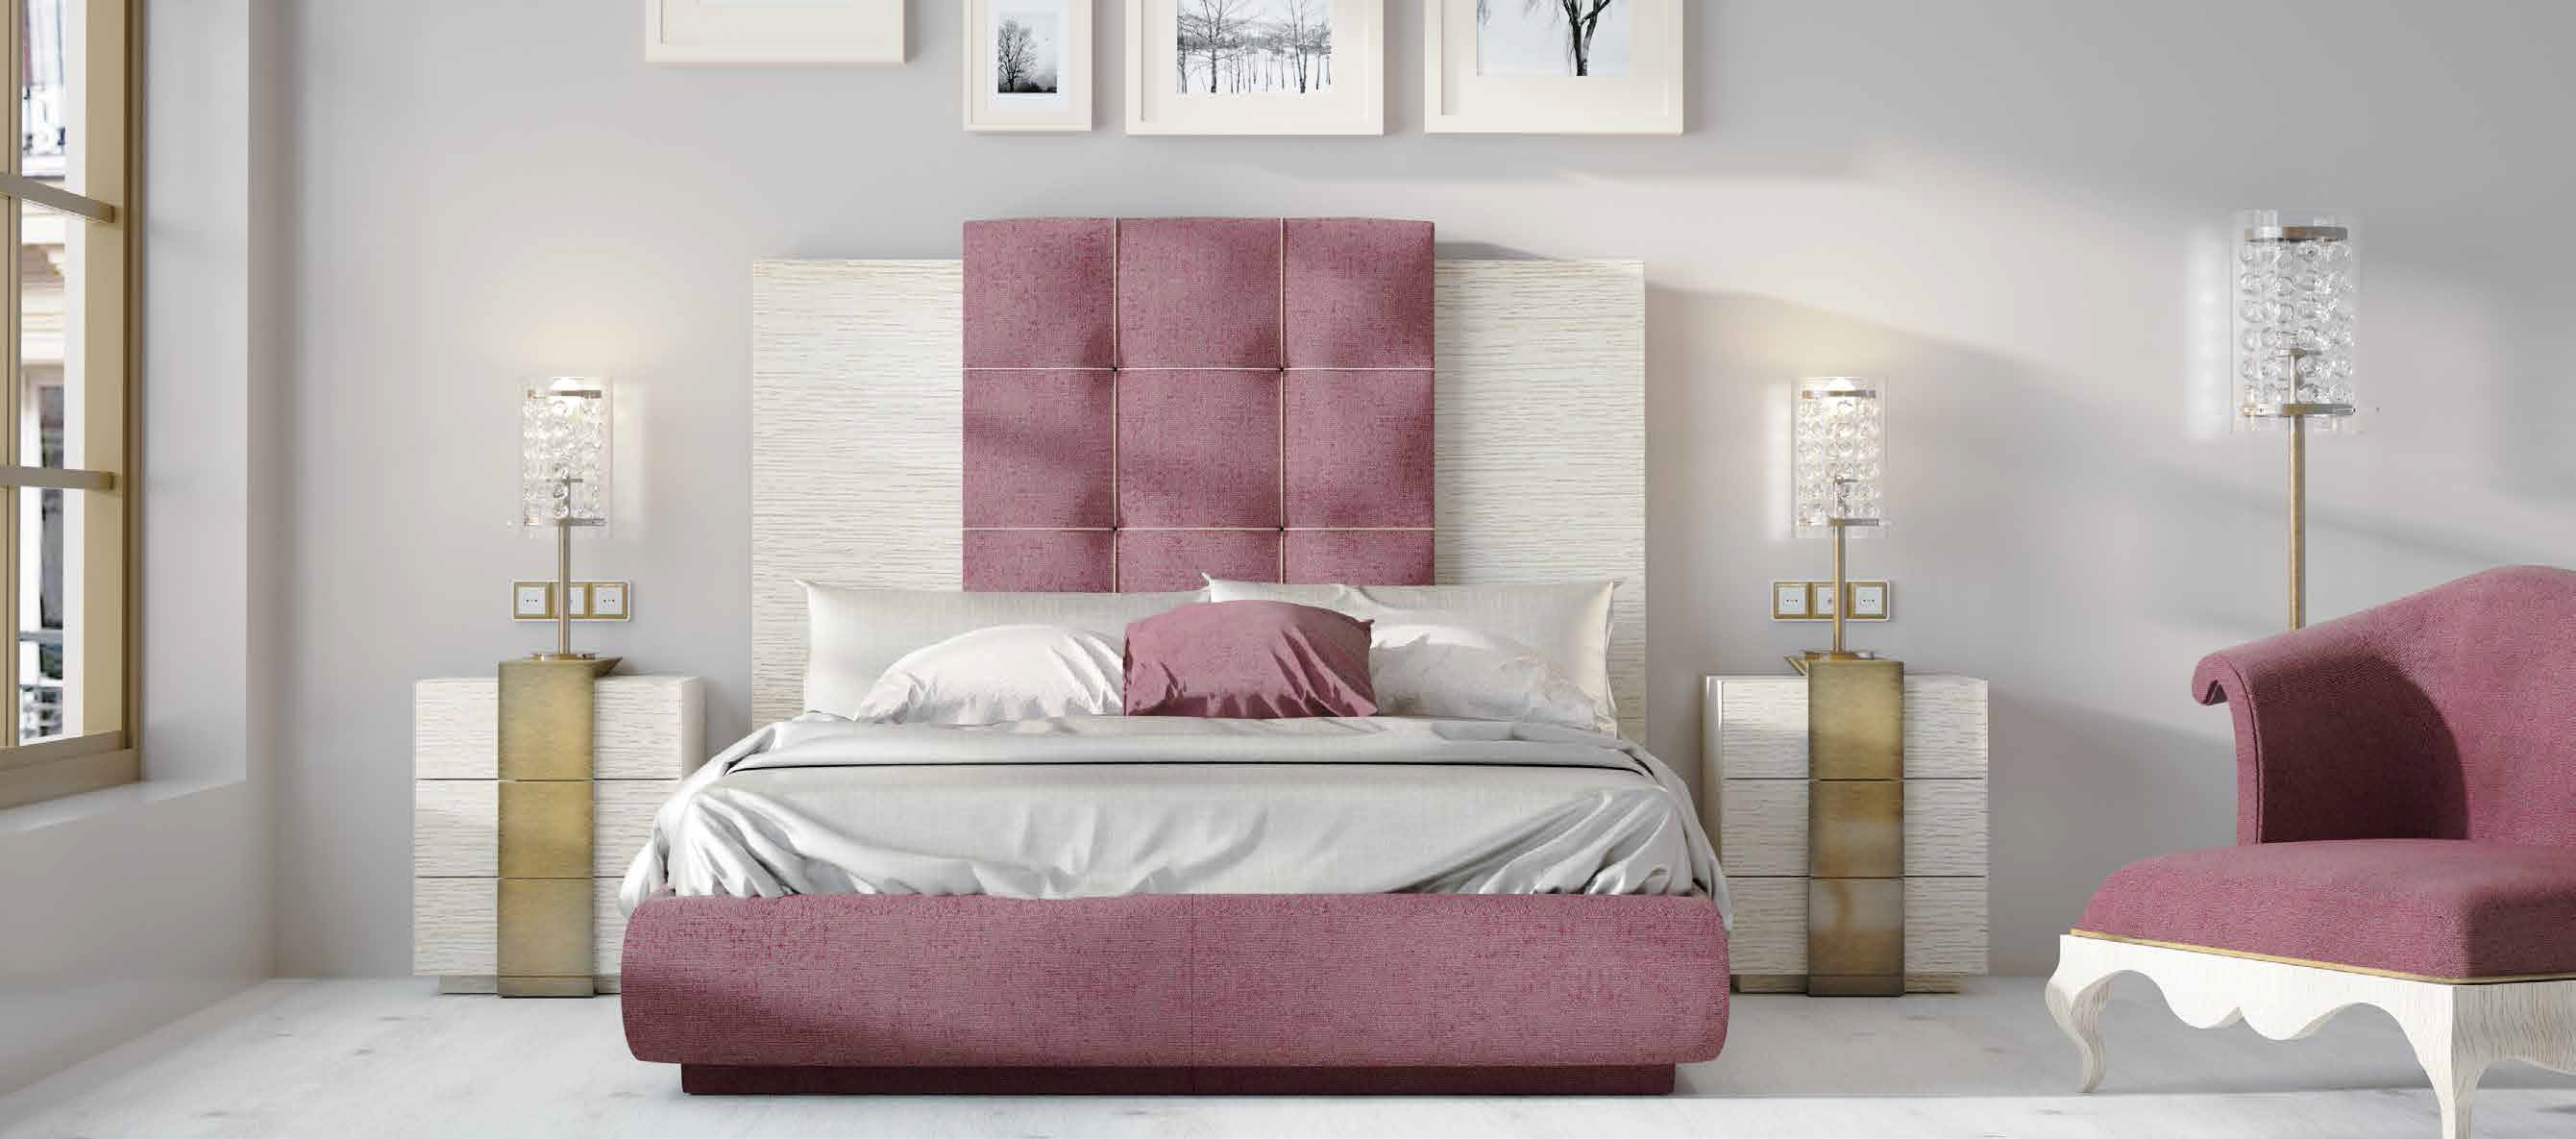 Brands Franco Furniture Bedrooms vol2, Spain DOR 11